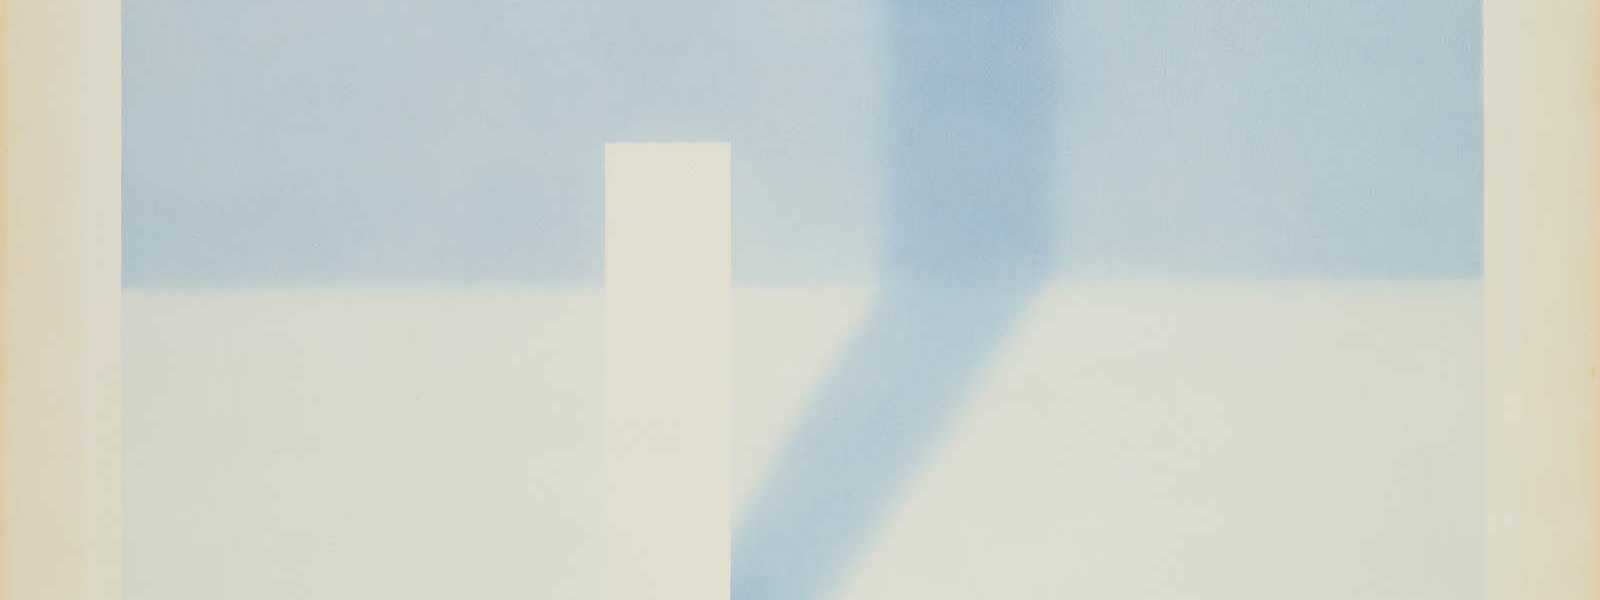 Gerhard Richter. Schattenbild I